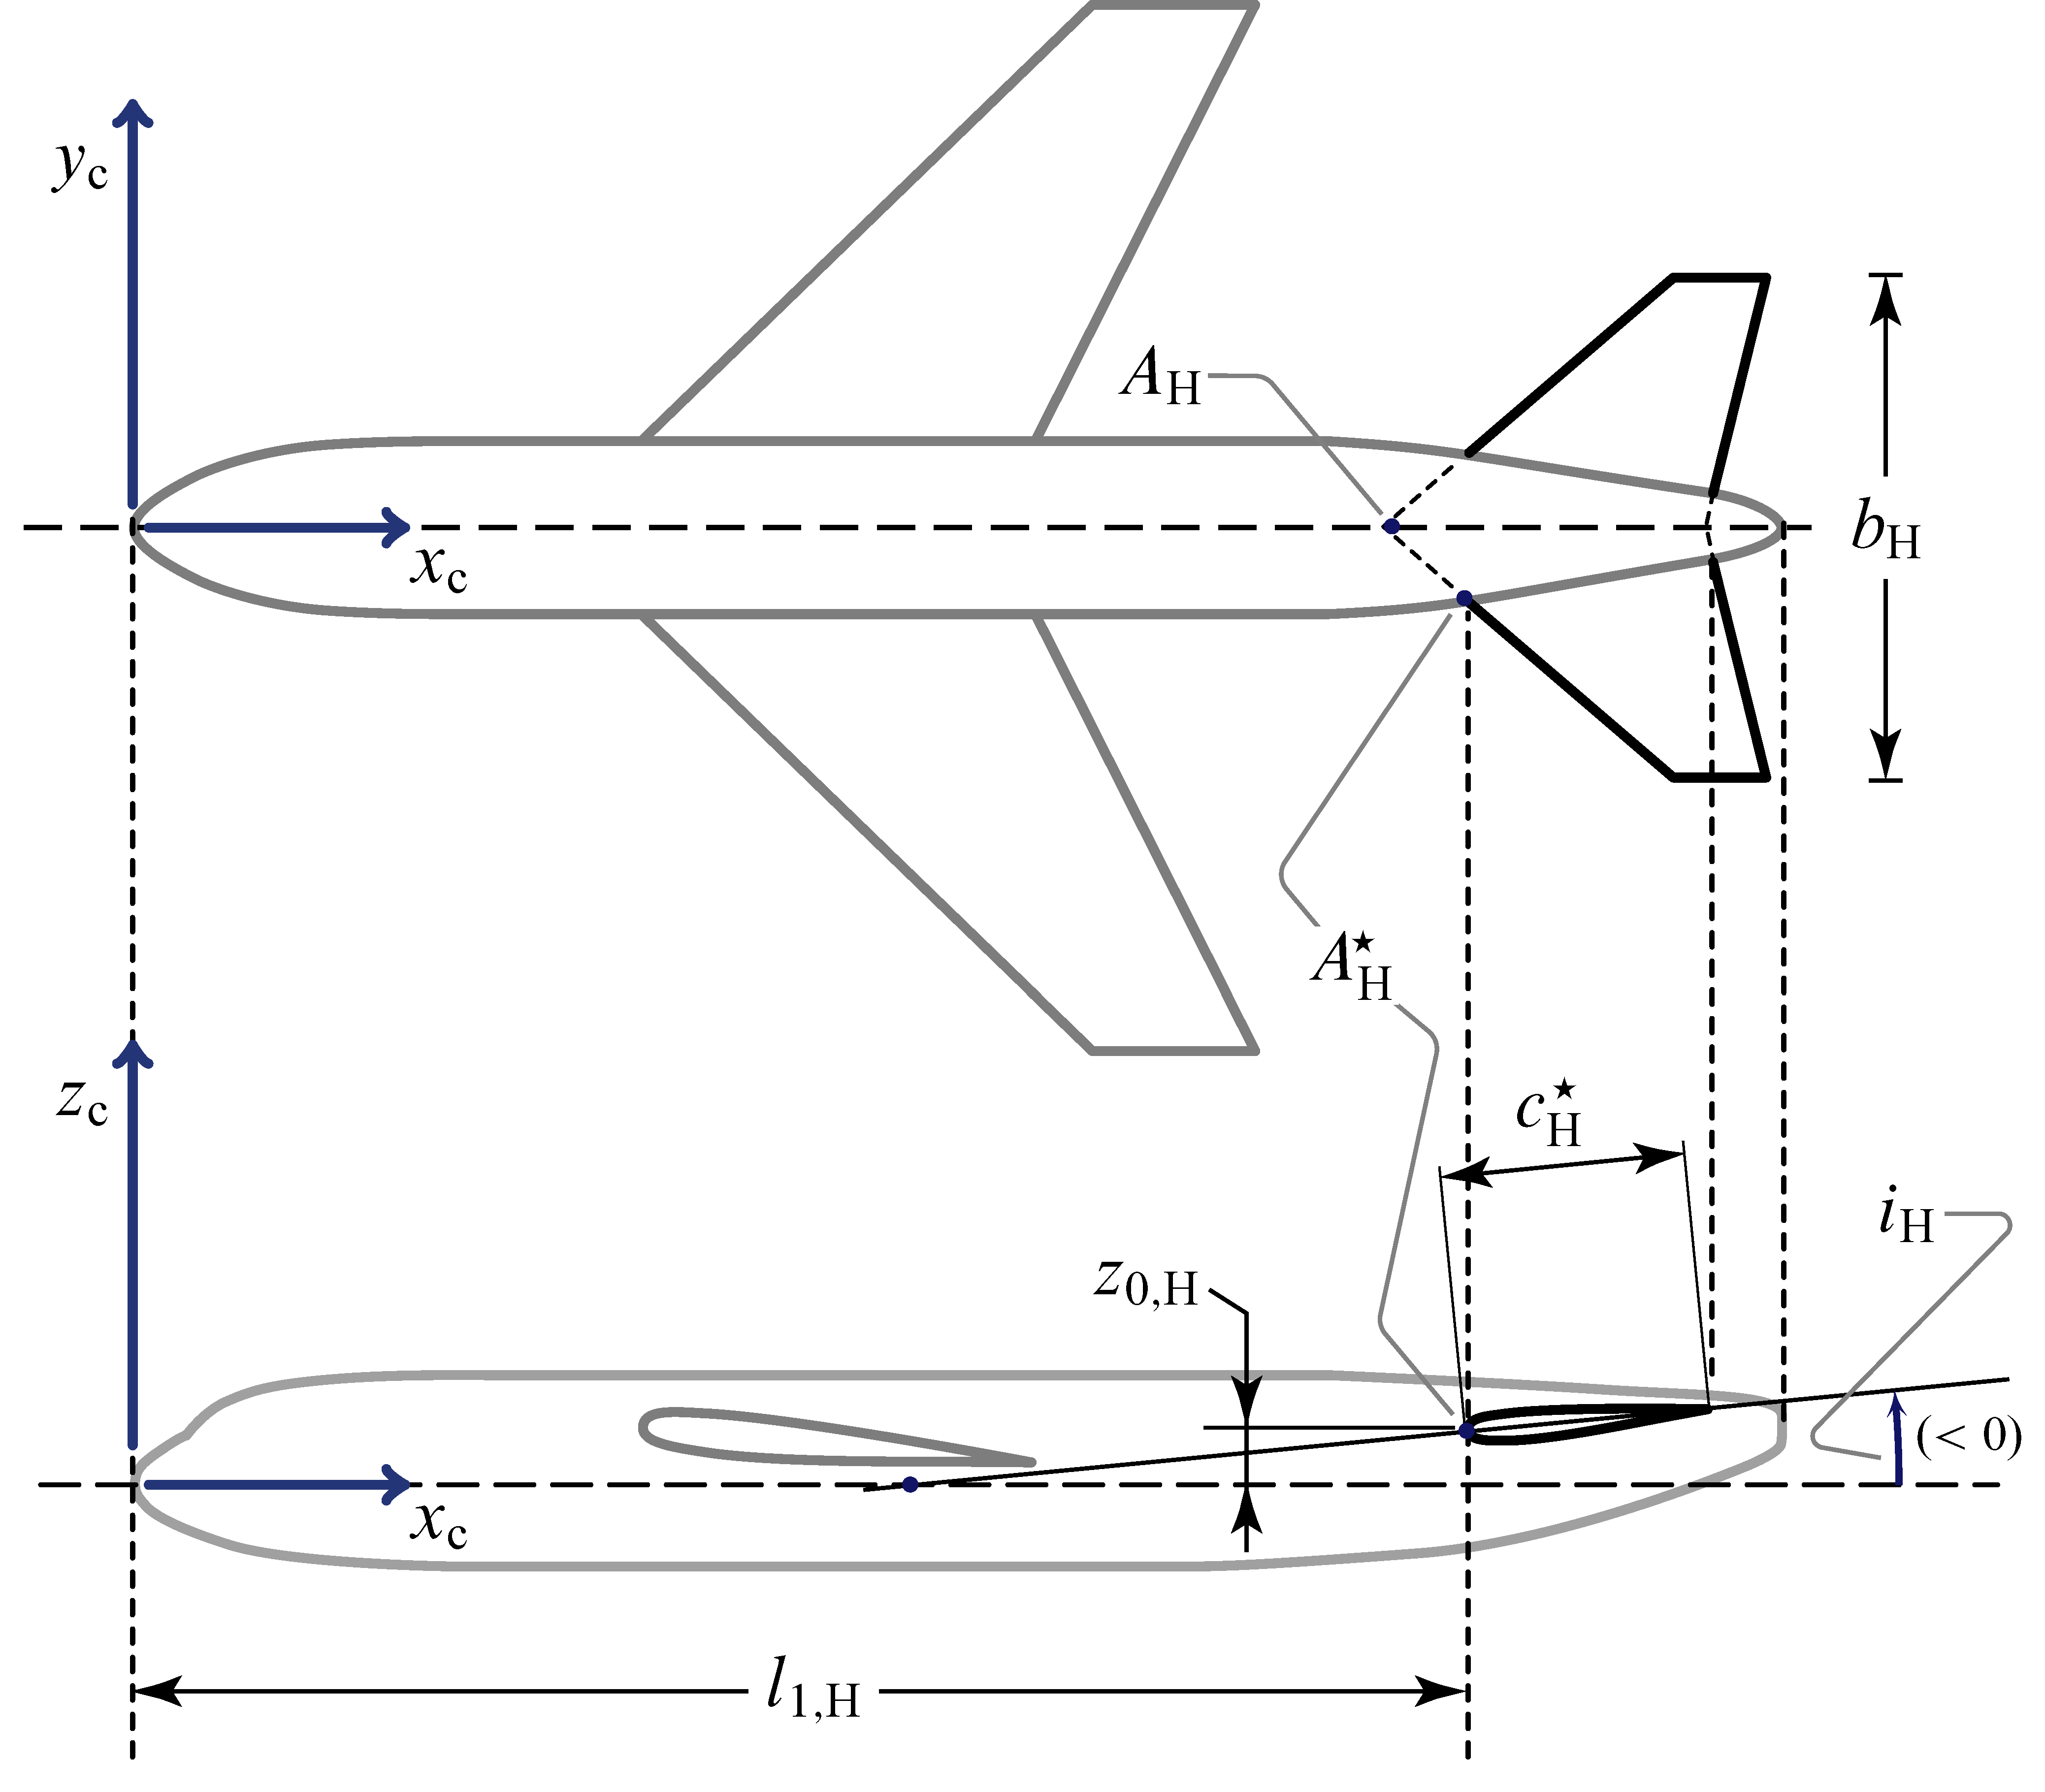 Nomenclature of the horizontal tailplane.